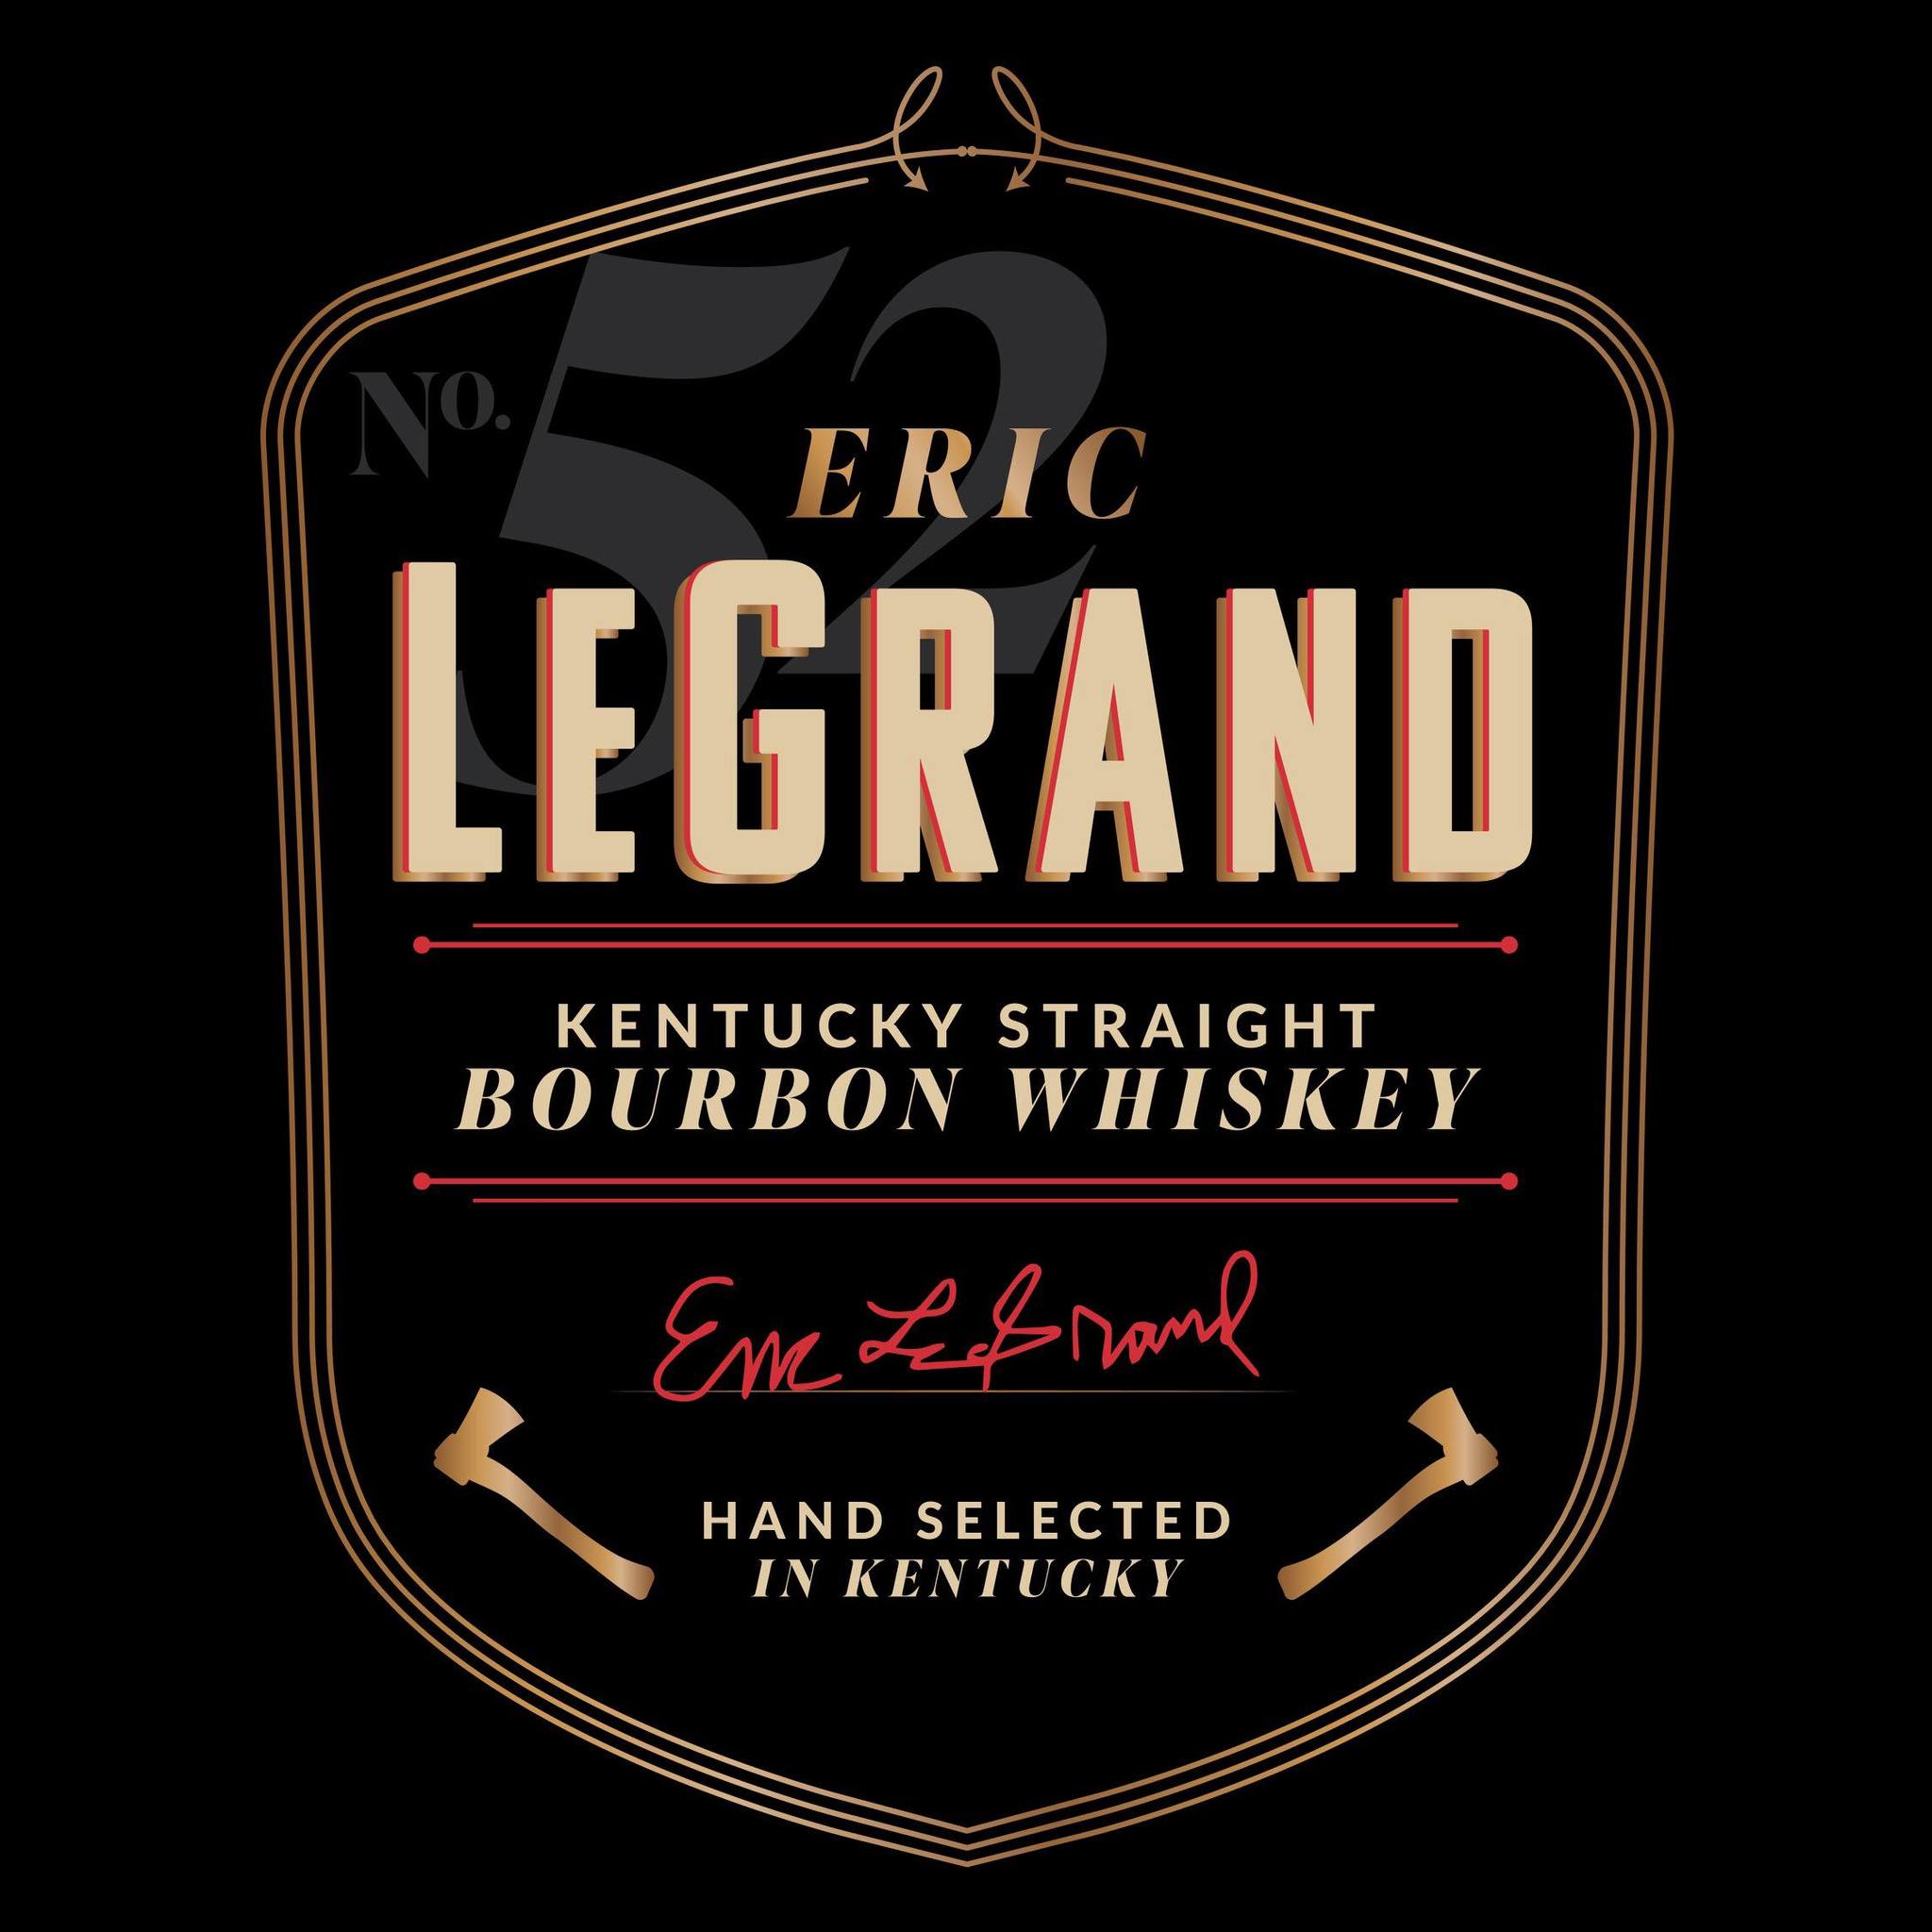 Eric Legrand Bourbon Whiskey logo